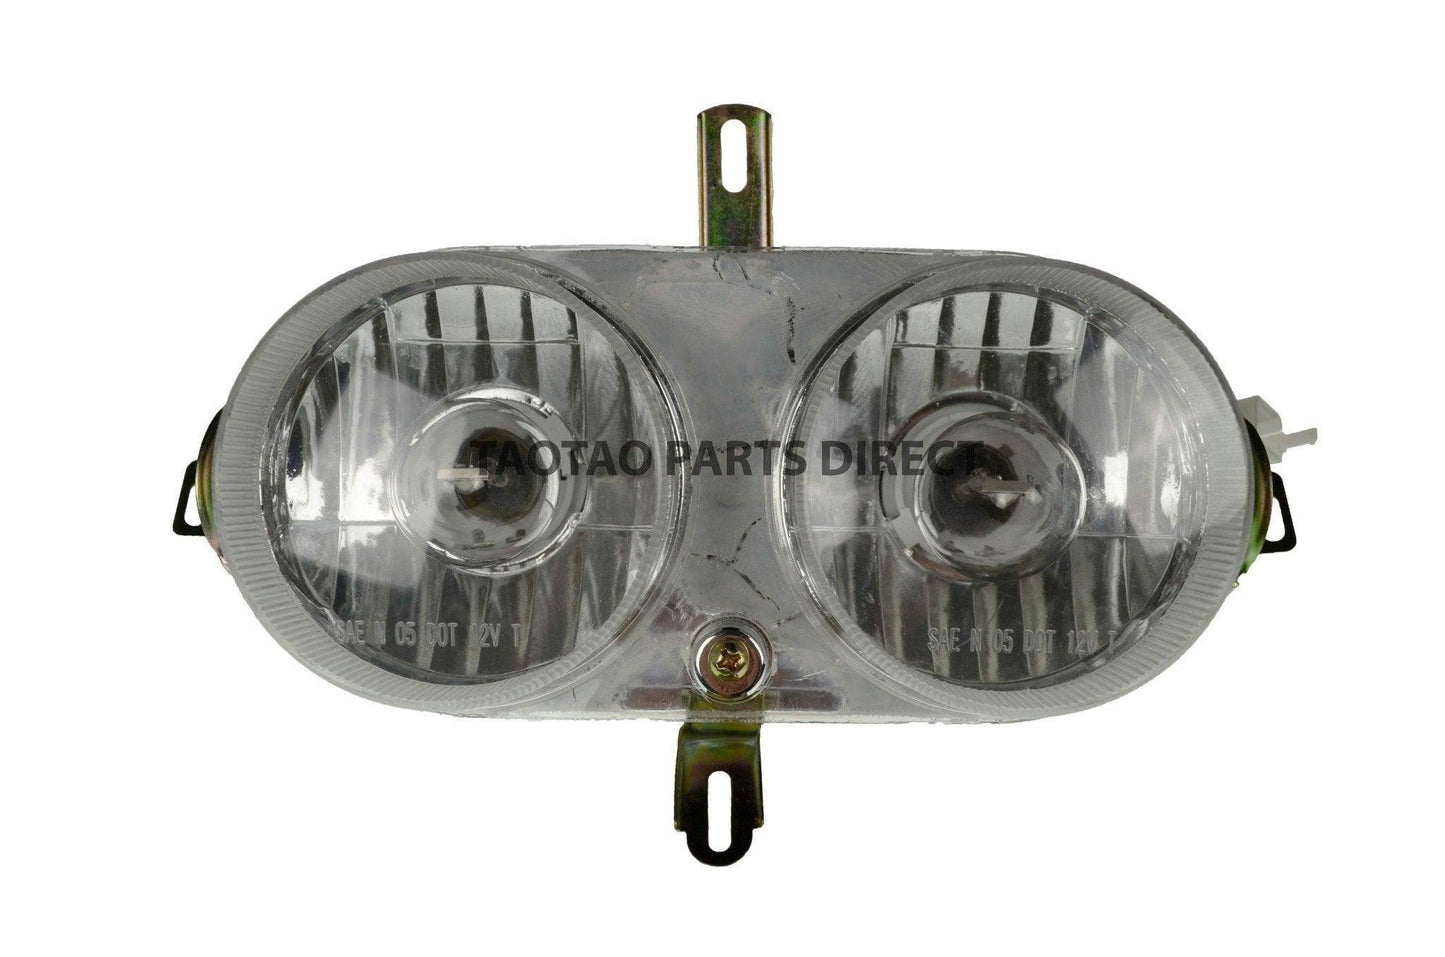 CY150B Headlight - TaoTao Parts Direct